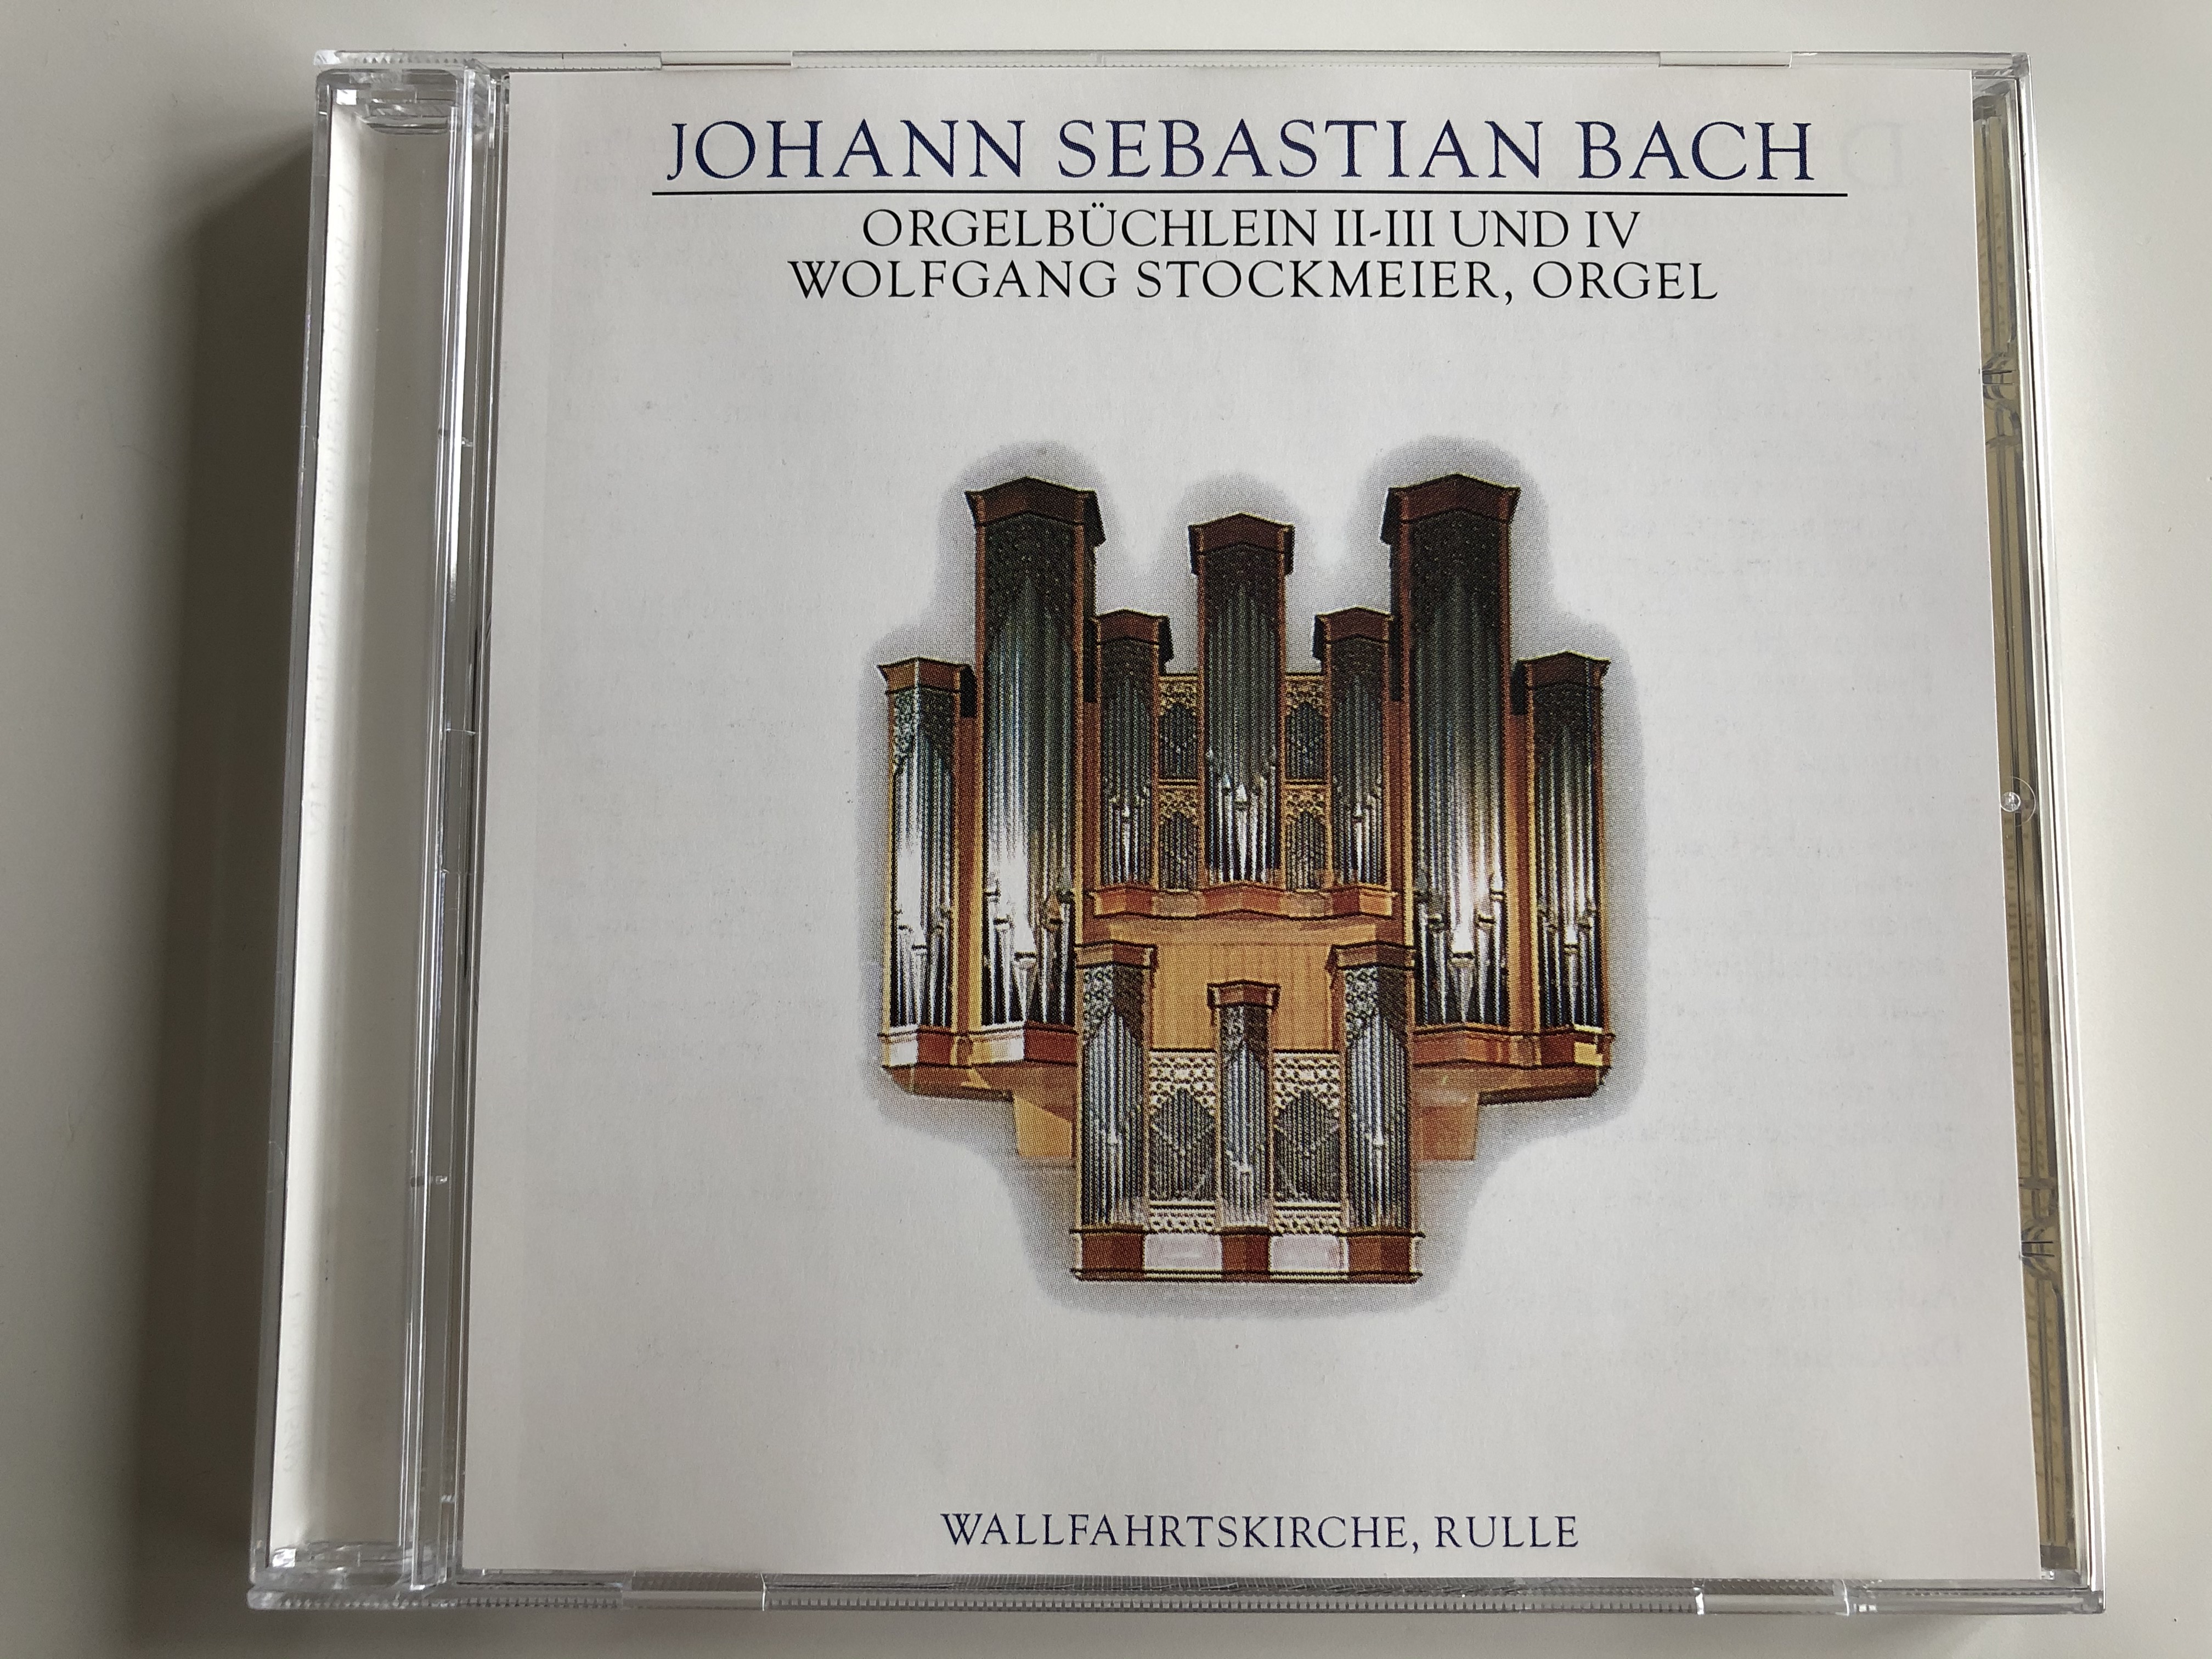 johann-sebastian-bach-orgelbuchlein-ii-iii-und-iv-wolfgang-stockmeier-orgel-wallfahrtskirche-rulle-art-music-audio-cd-cd-20-1-.jpg